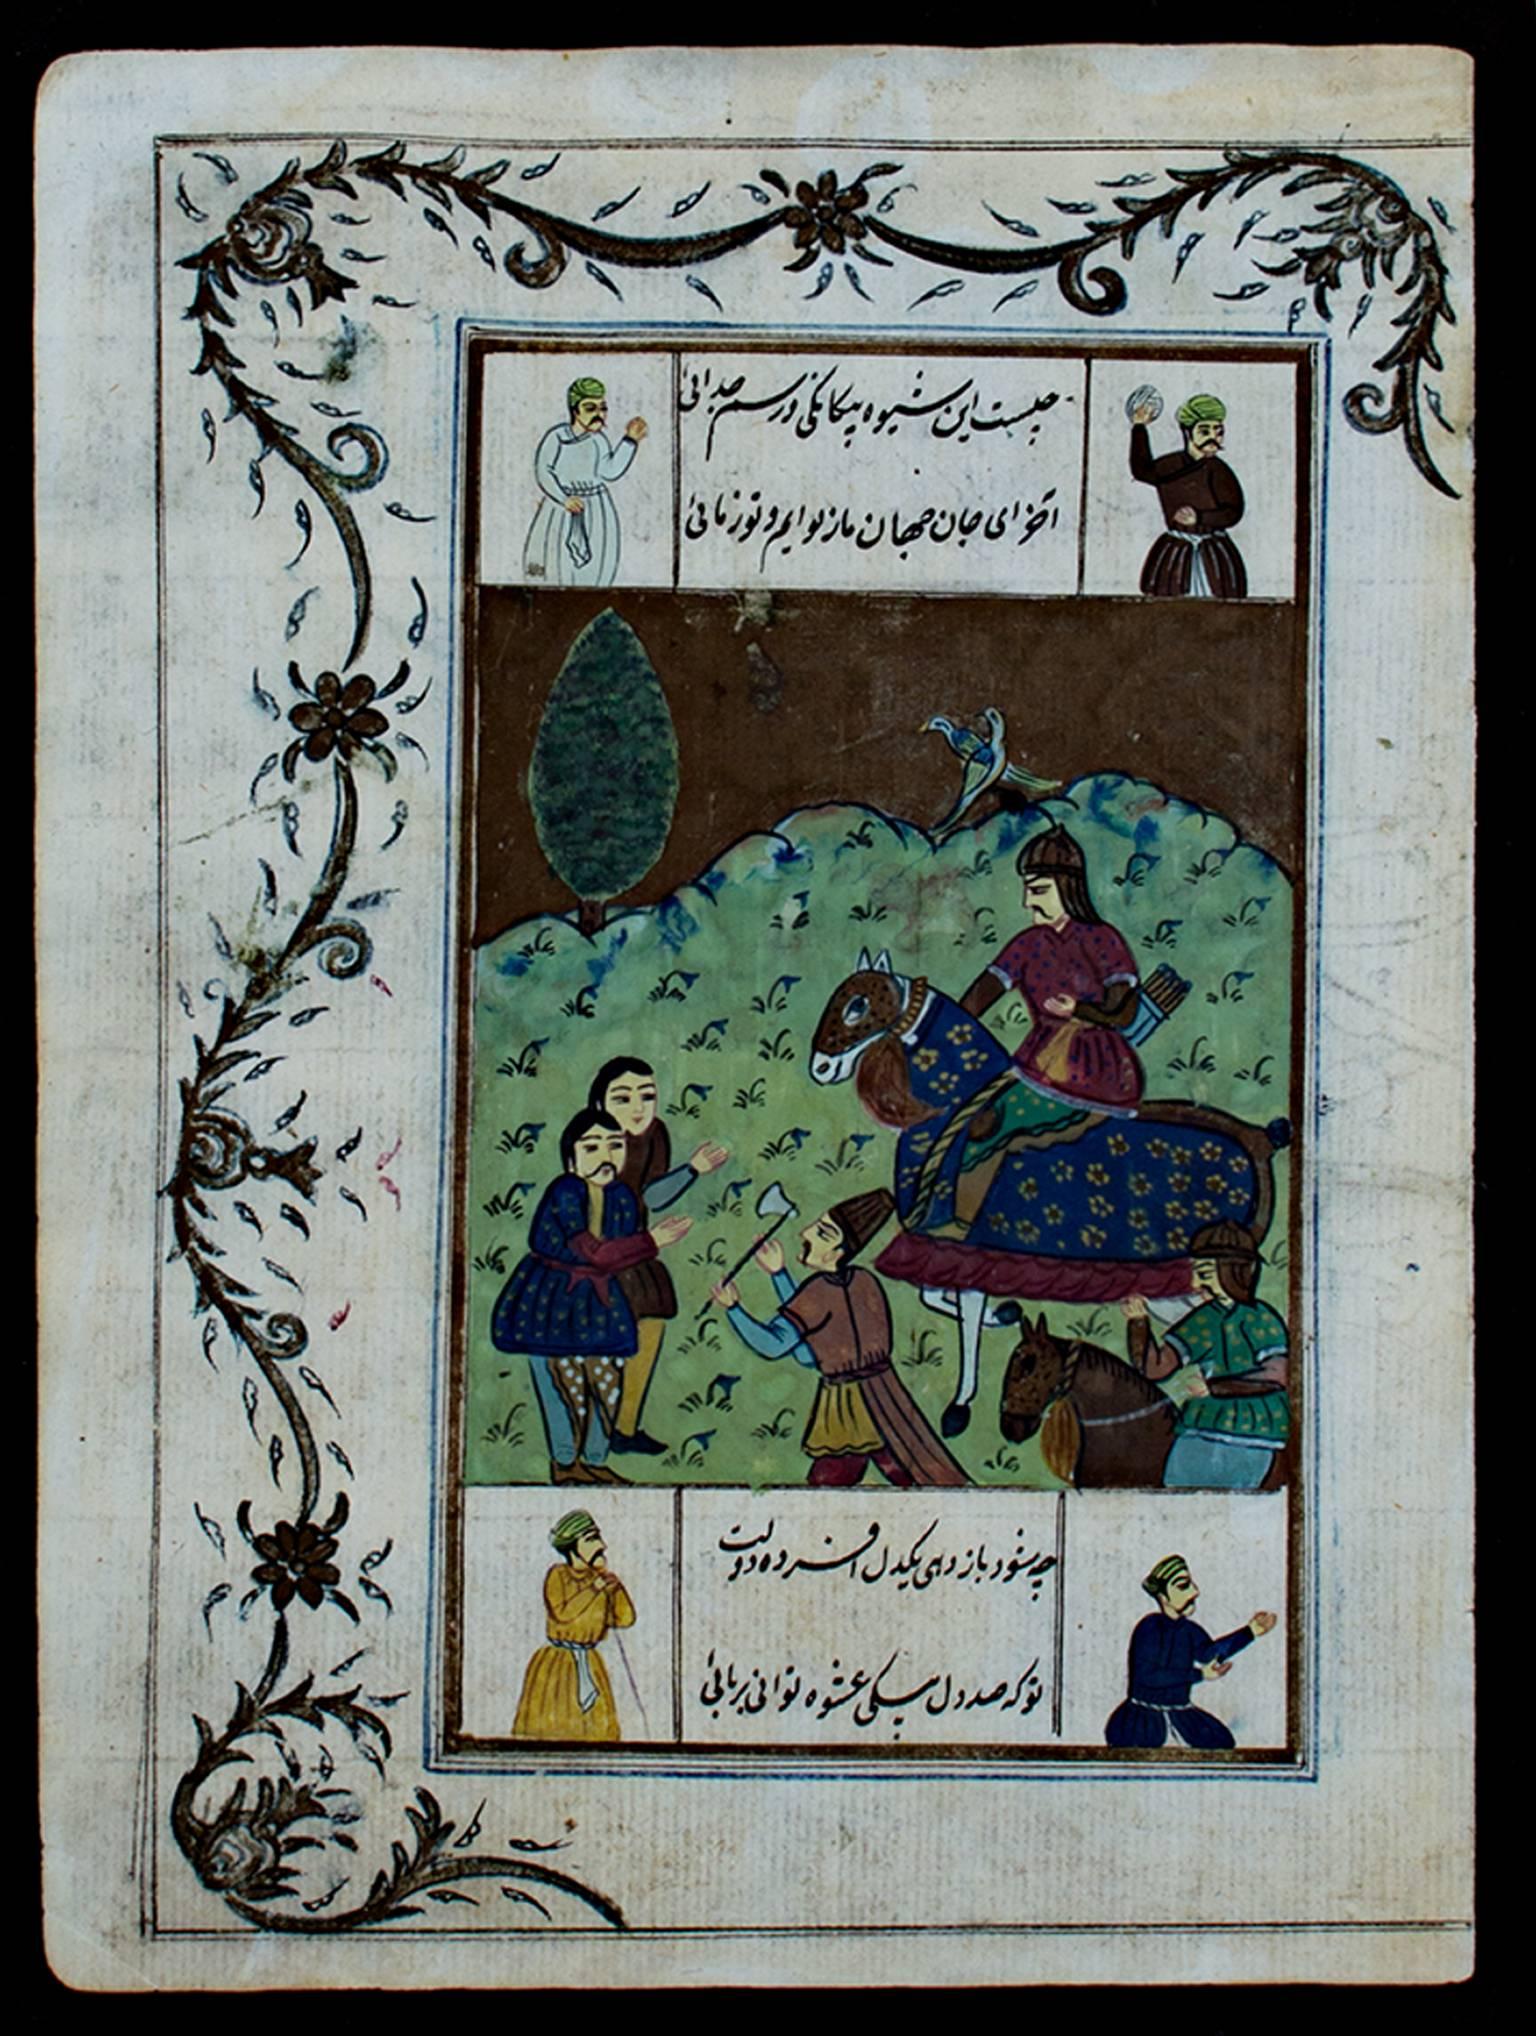 « Two Warriors on Horseback, Foot Soldier, and Civilians », page de livre persane